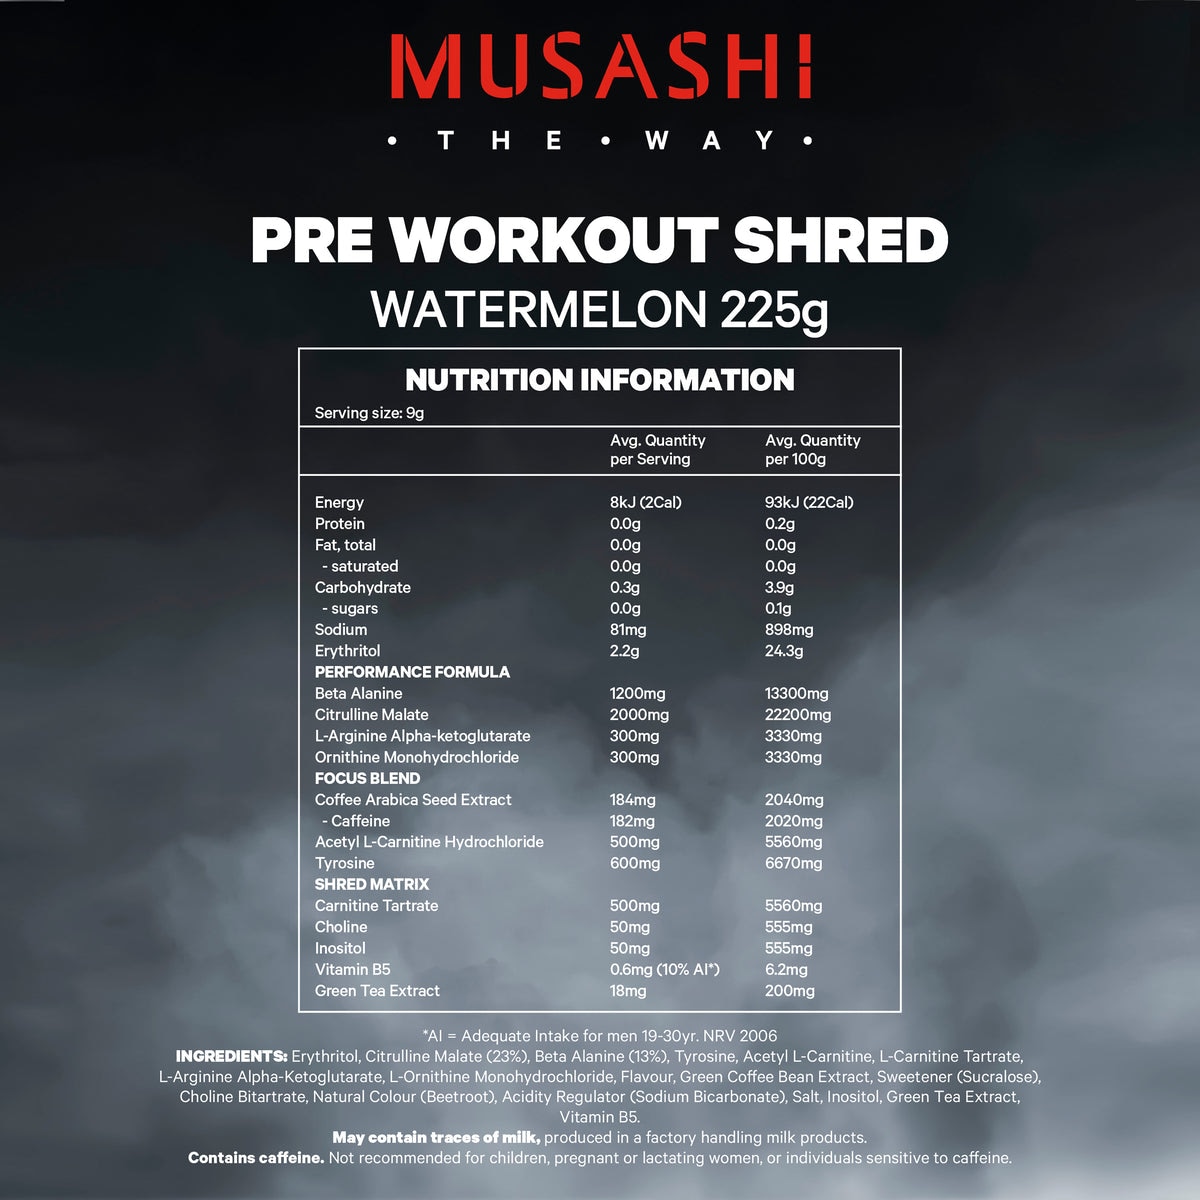 Musashi Pre Workout Shred Watermelon 225g